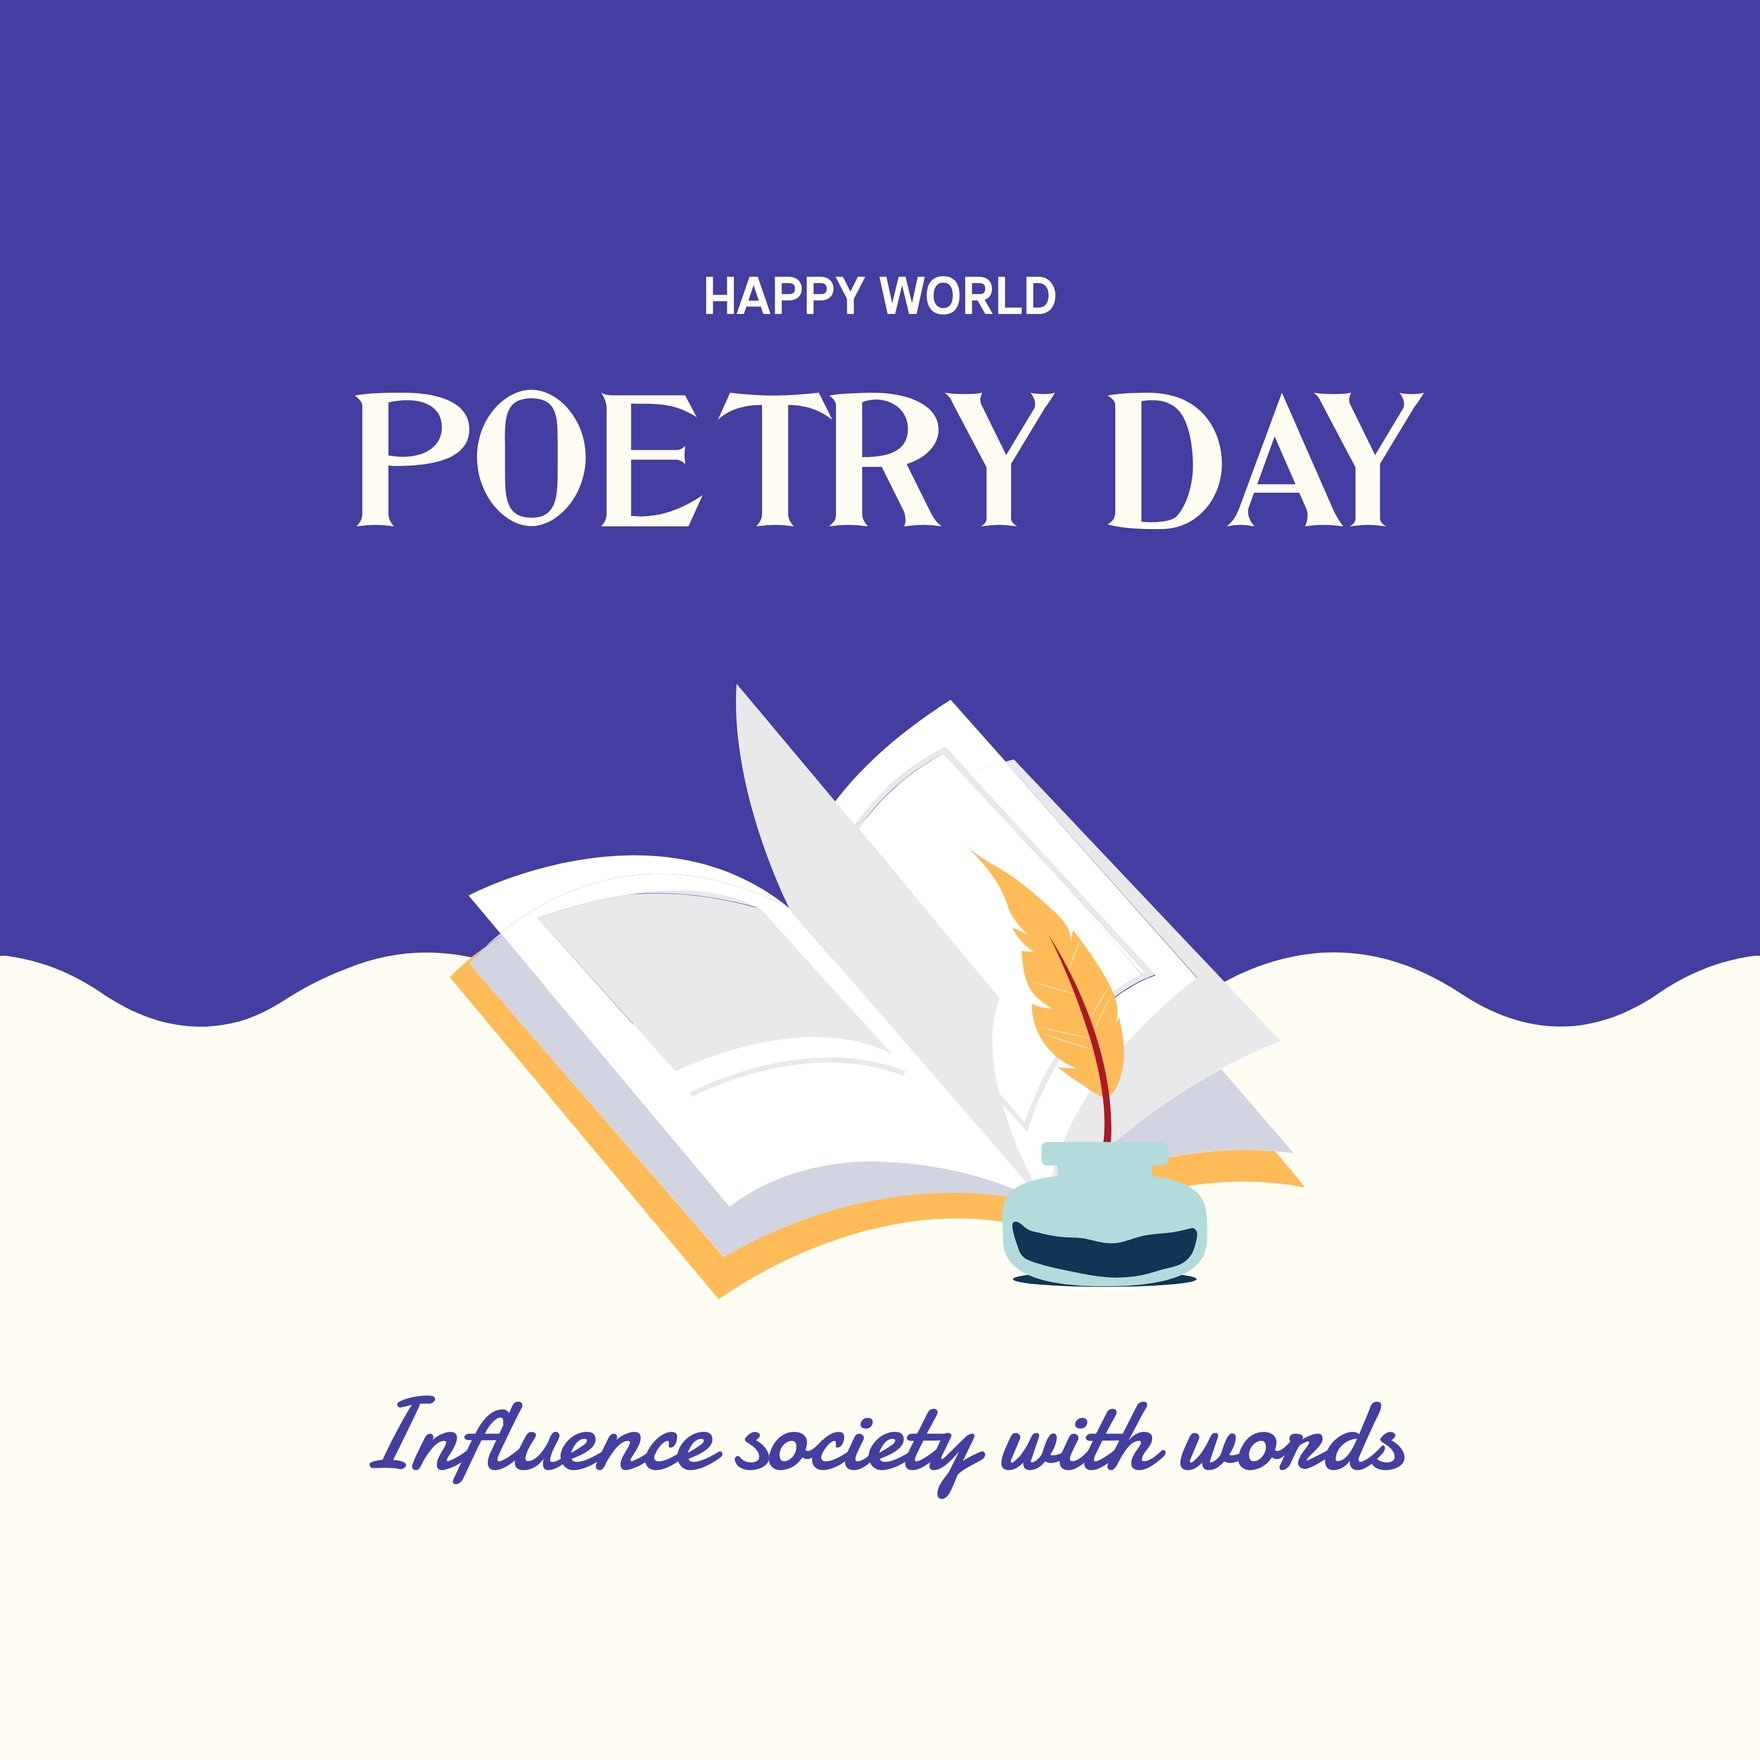 World Poetry Day Instagram Post in Illustrator, PSD, EPS, SVG, PNG, JPEG